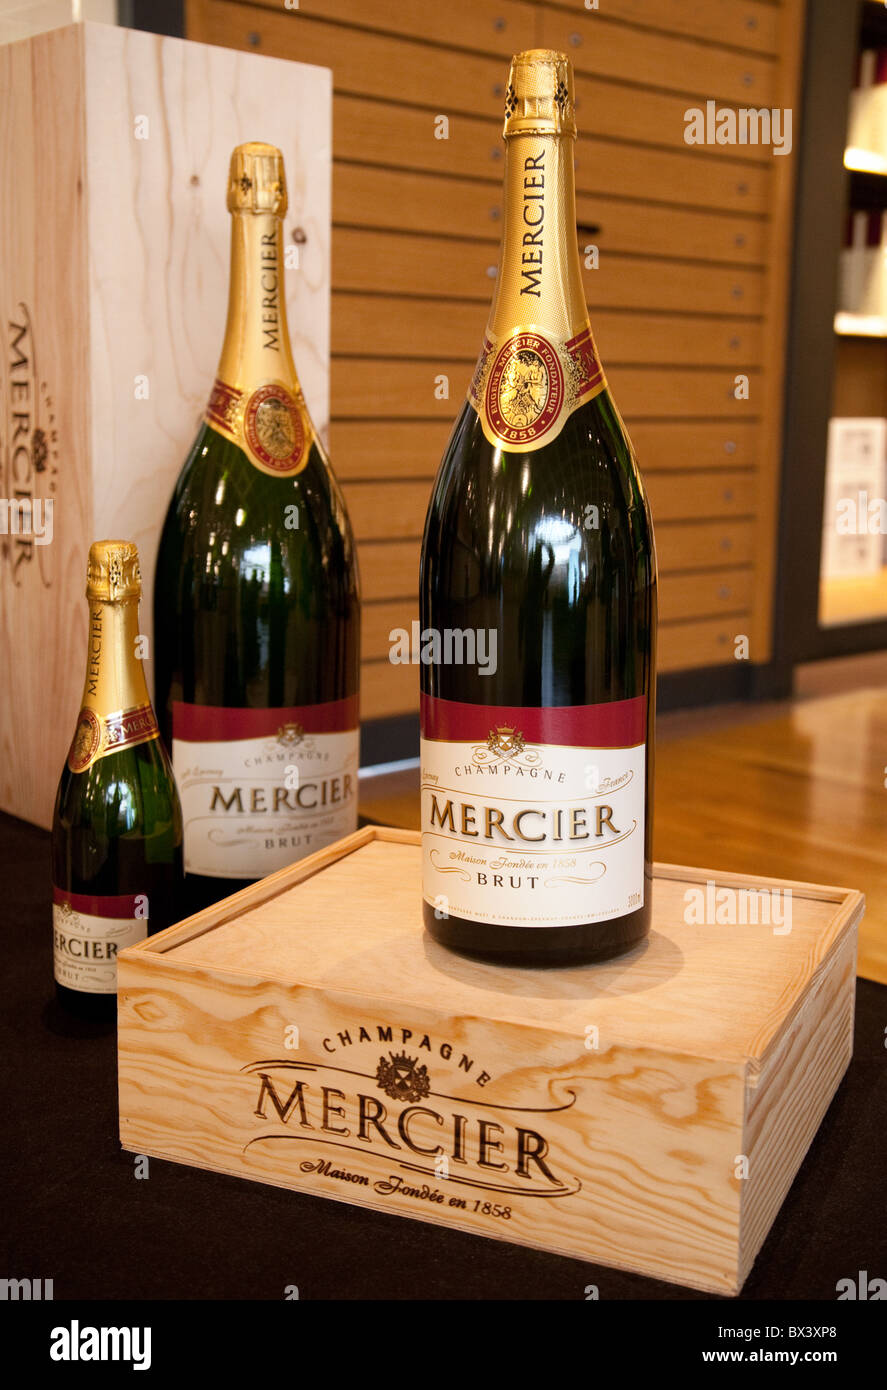 Bottles of Mercier champagne on display, Mercier Champagne House, Avenue de Champagne Epernay, France Stock Photo